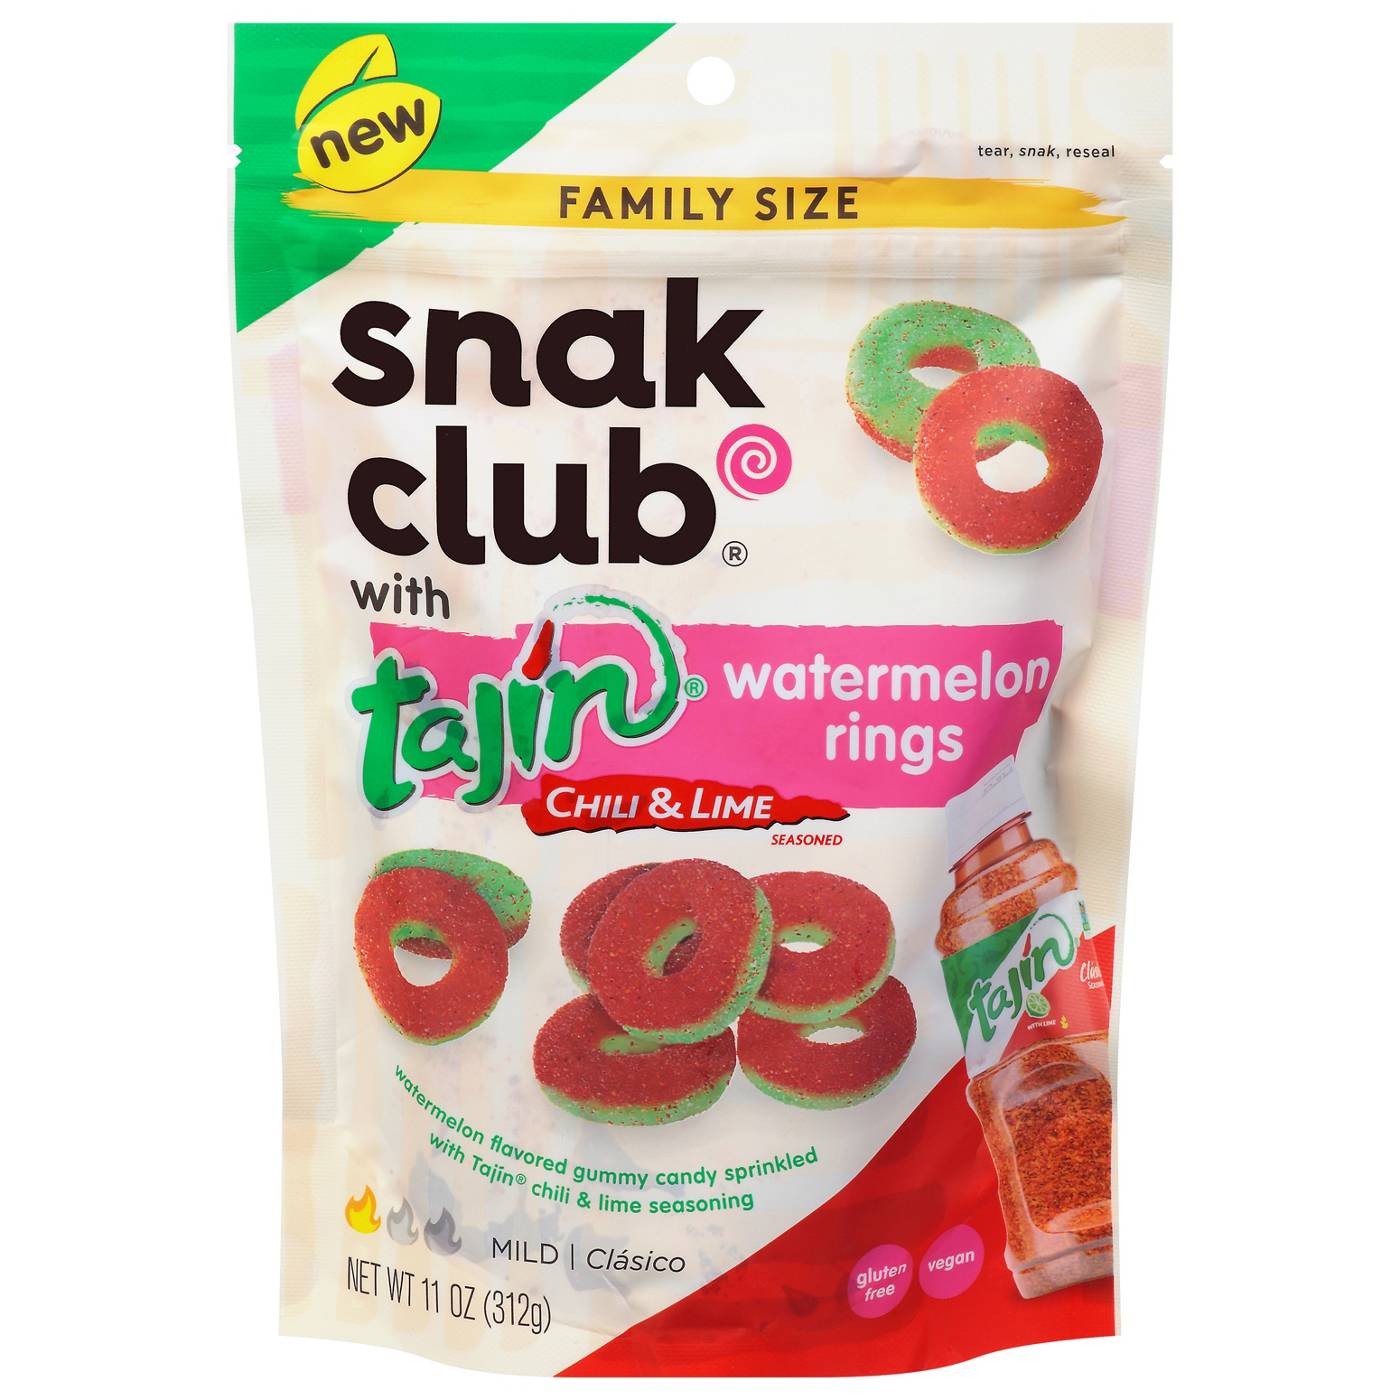 Snak Club Tajin Watermelon Rings Candy - Family Size; image 1 of 2